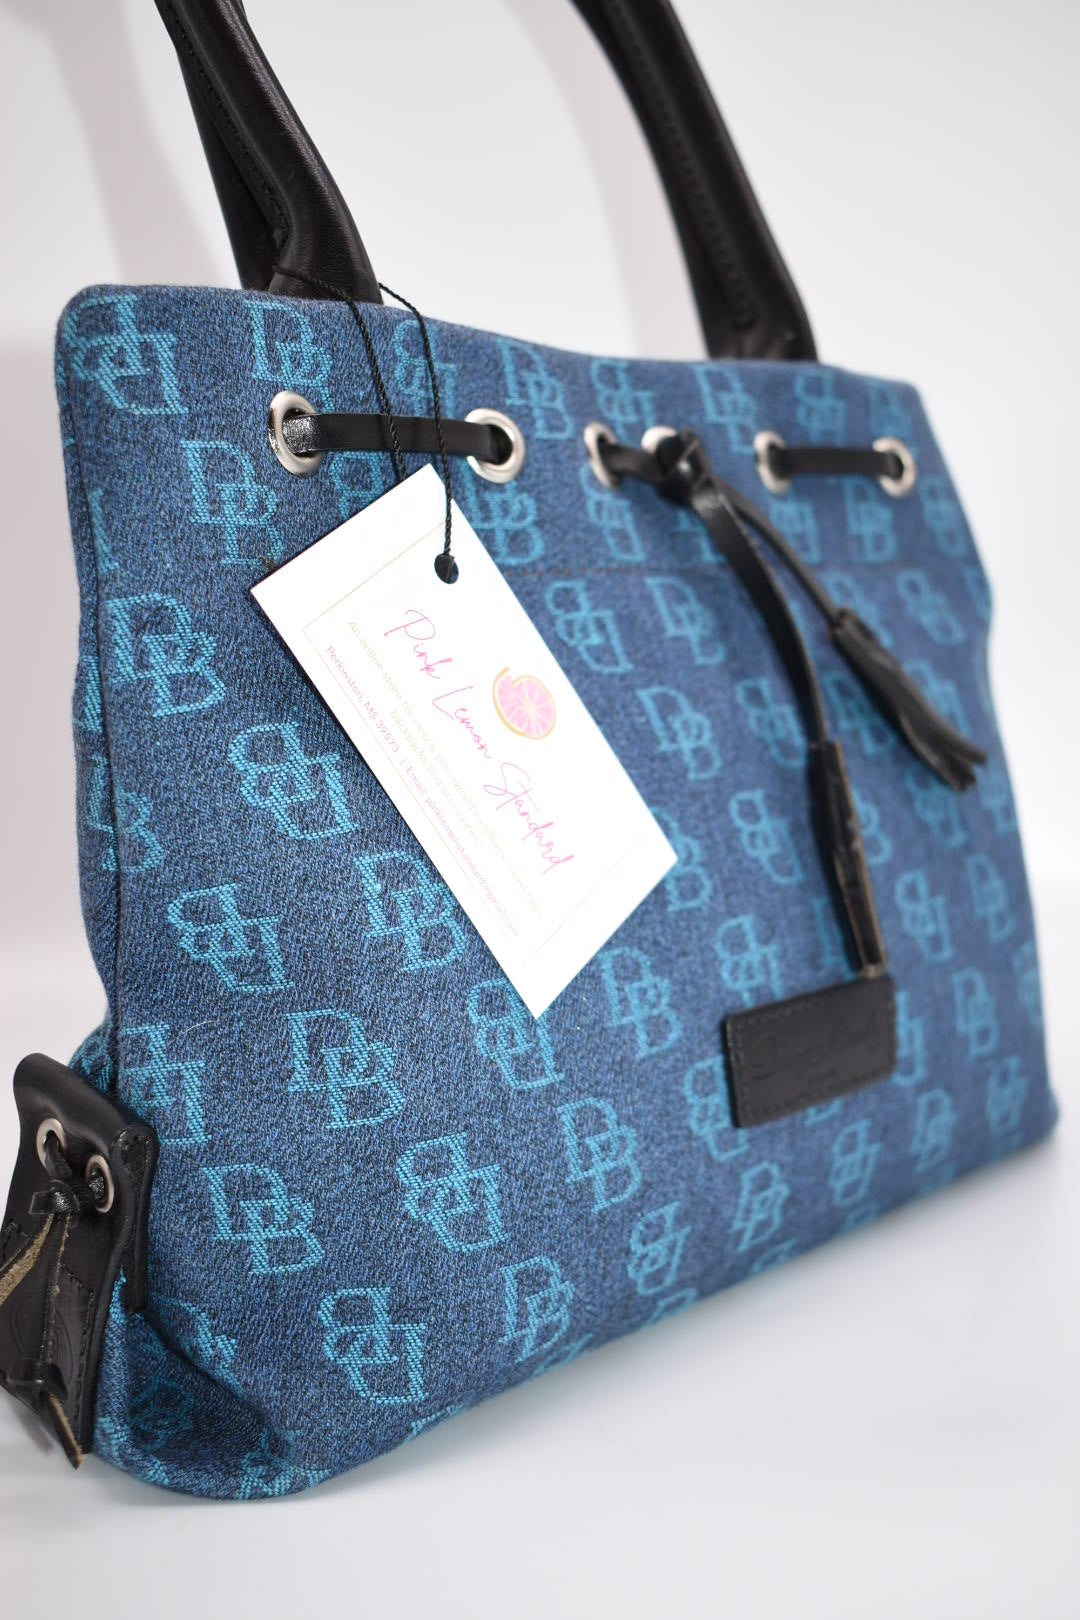 Dooney & Bourke Tassel Tote Bag in Logo Blue on Blue